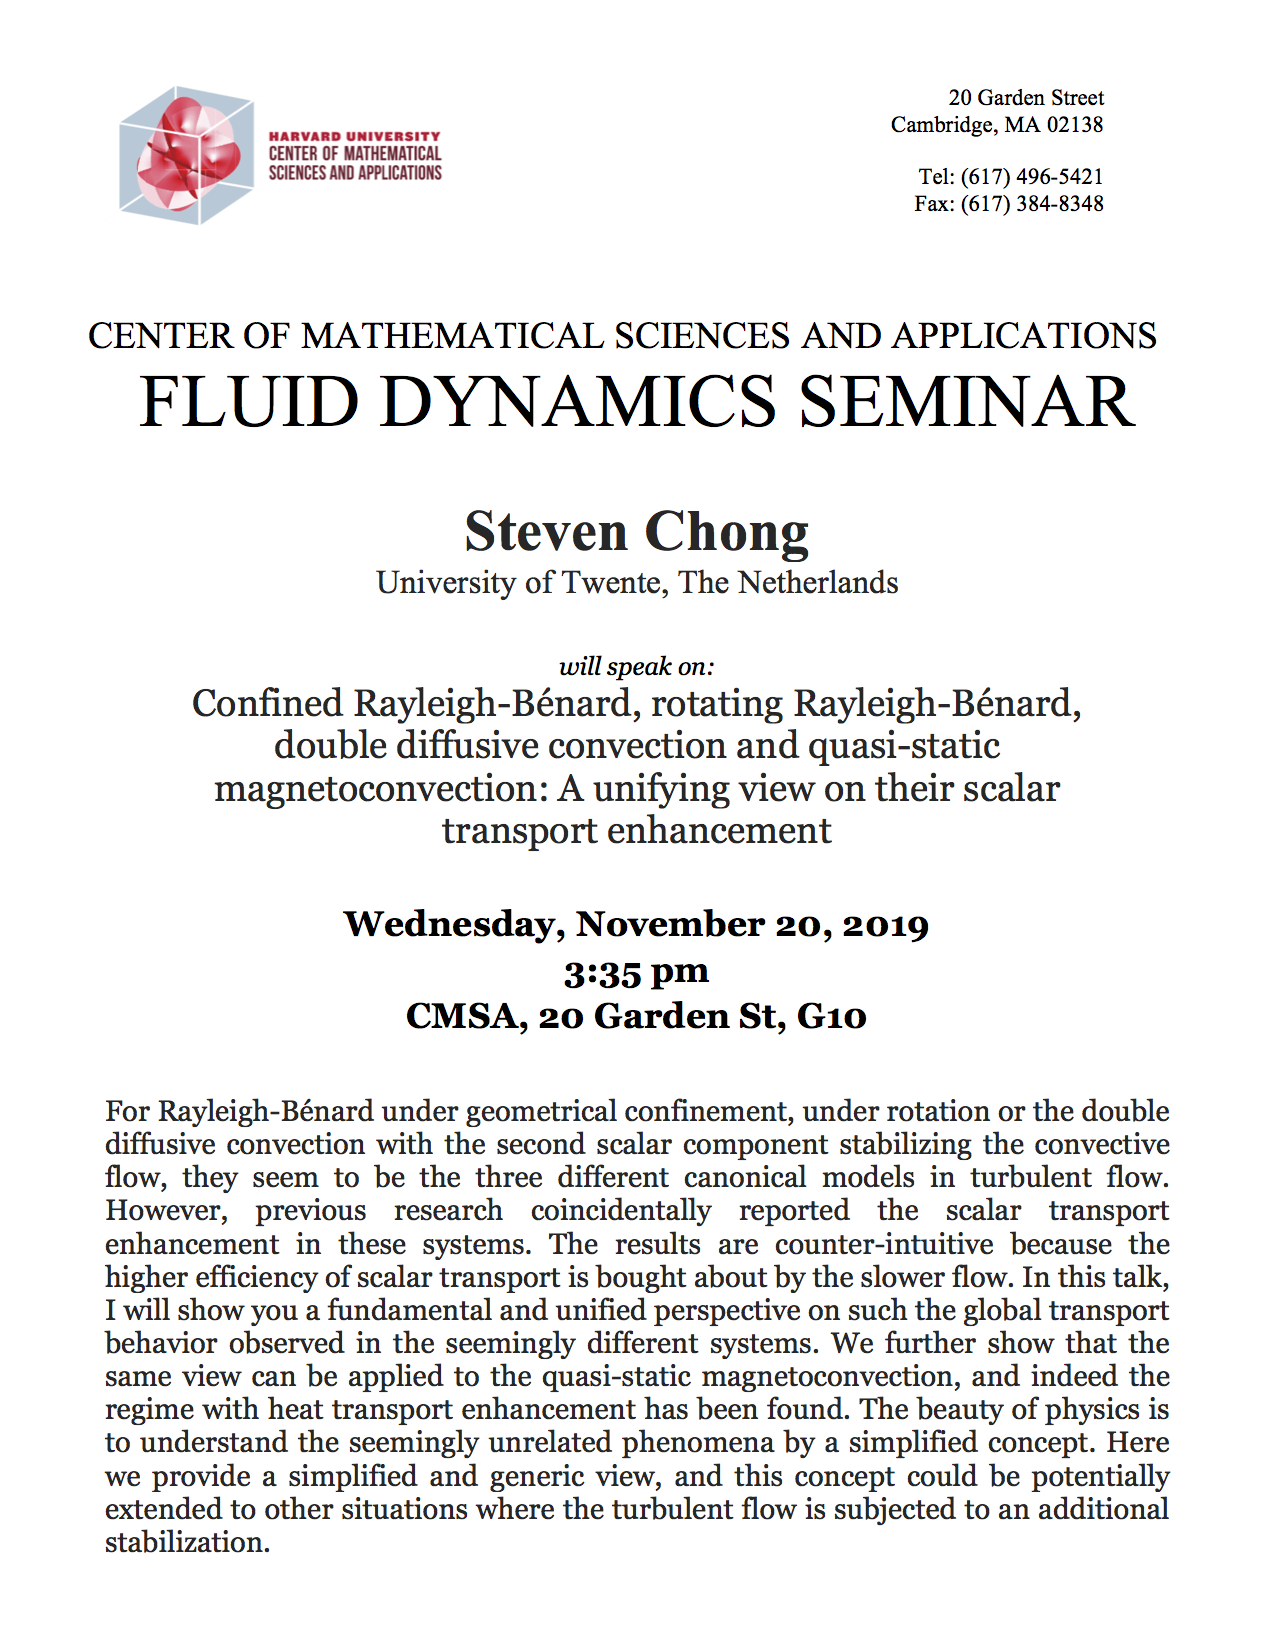 Fluid-Dynamics-Seminar-11.20.19.3.35